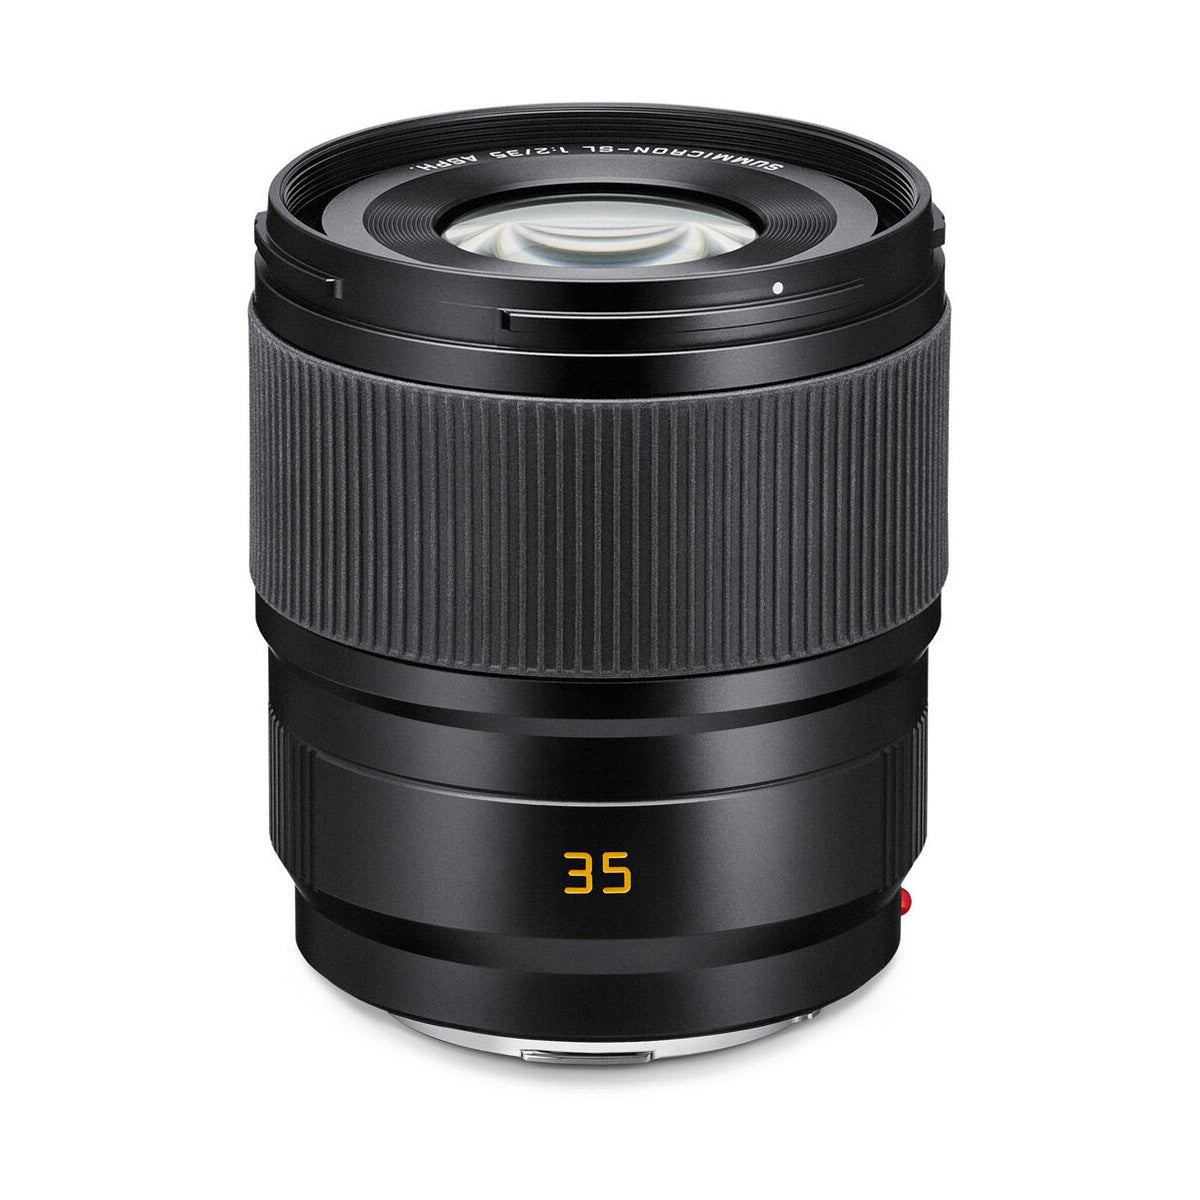 Leica 35mm f/2 Summicron-SL ASPH Lens